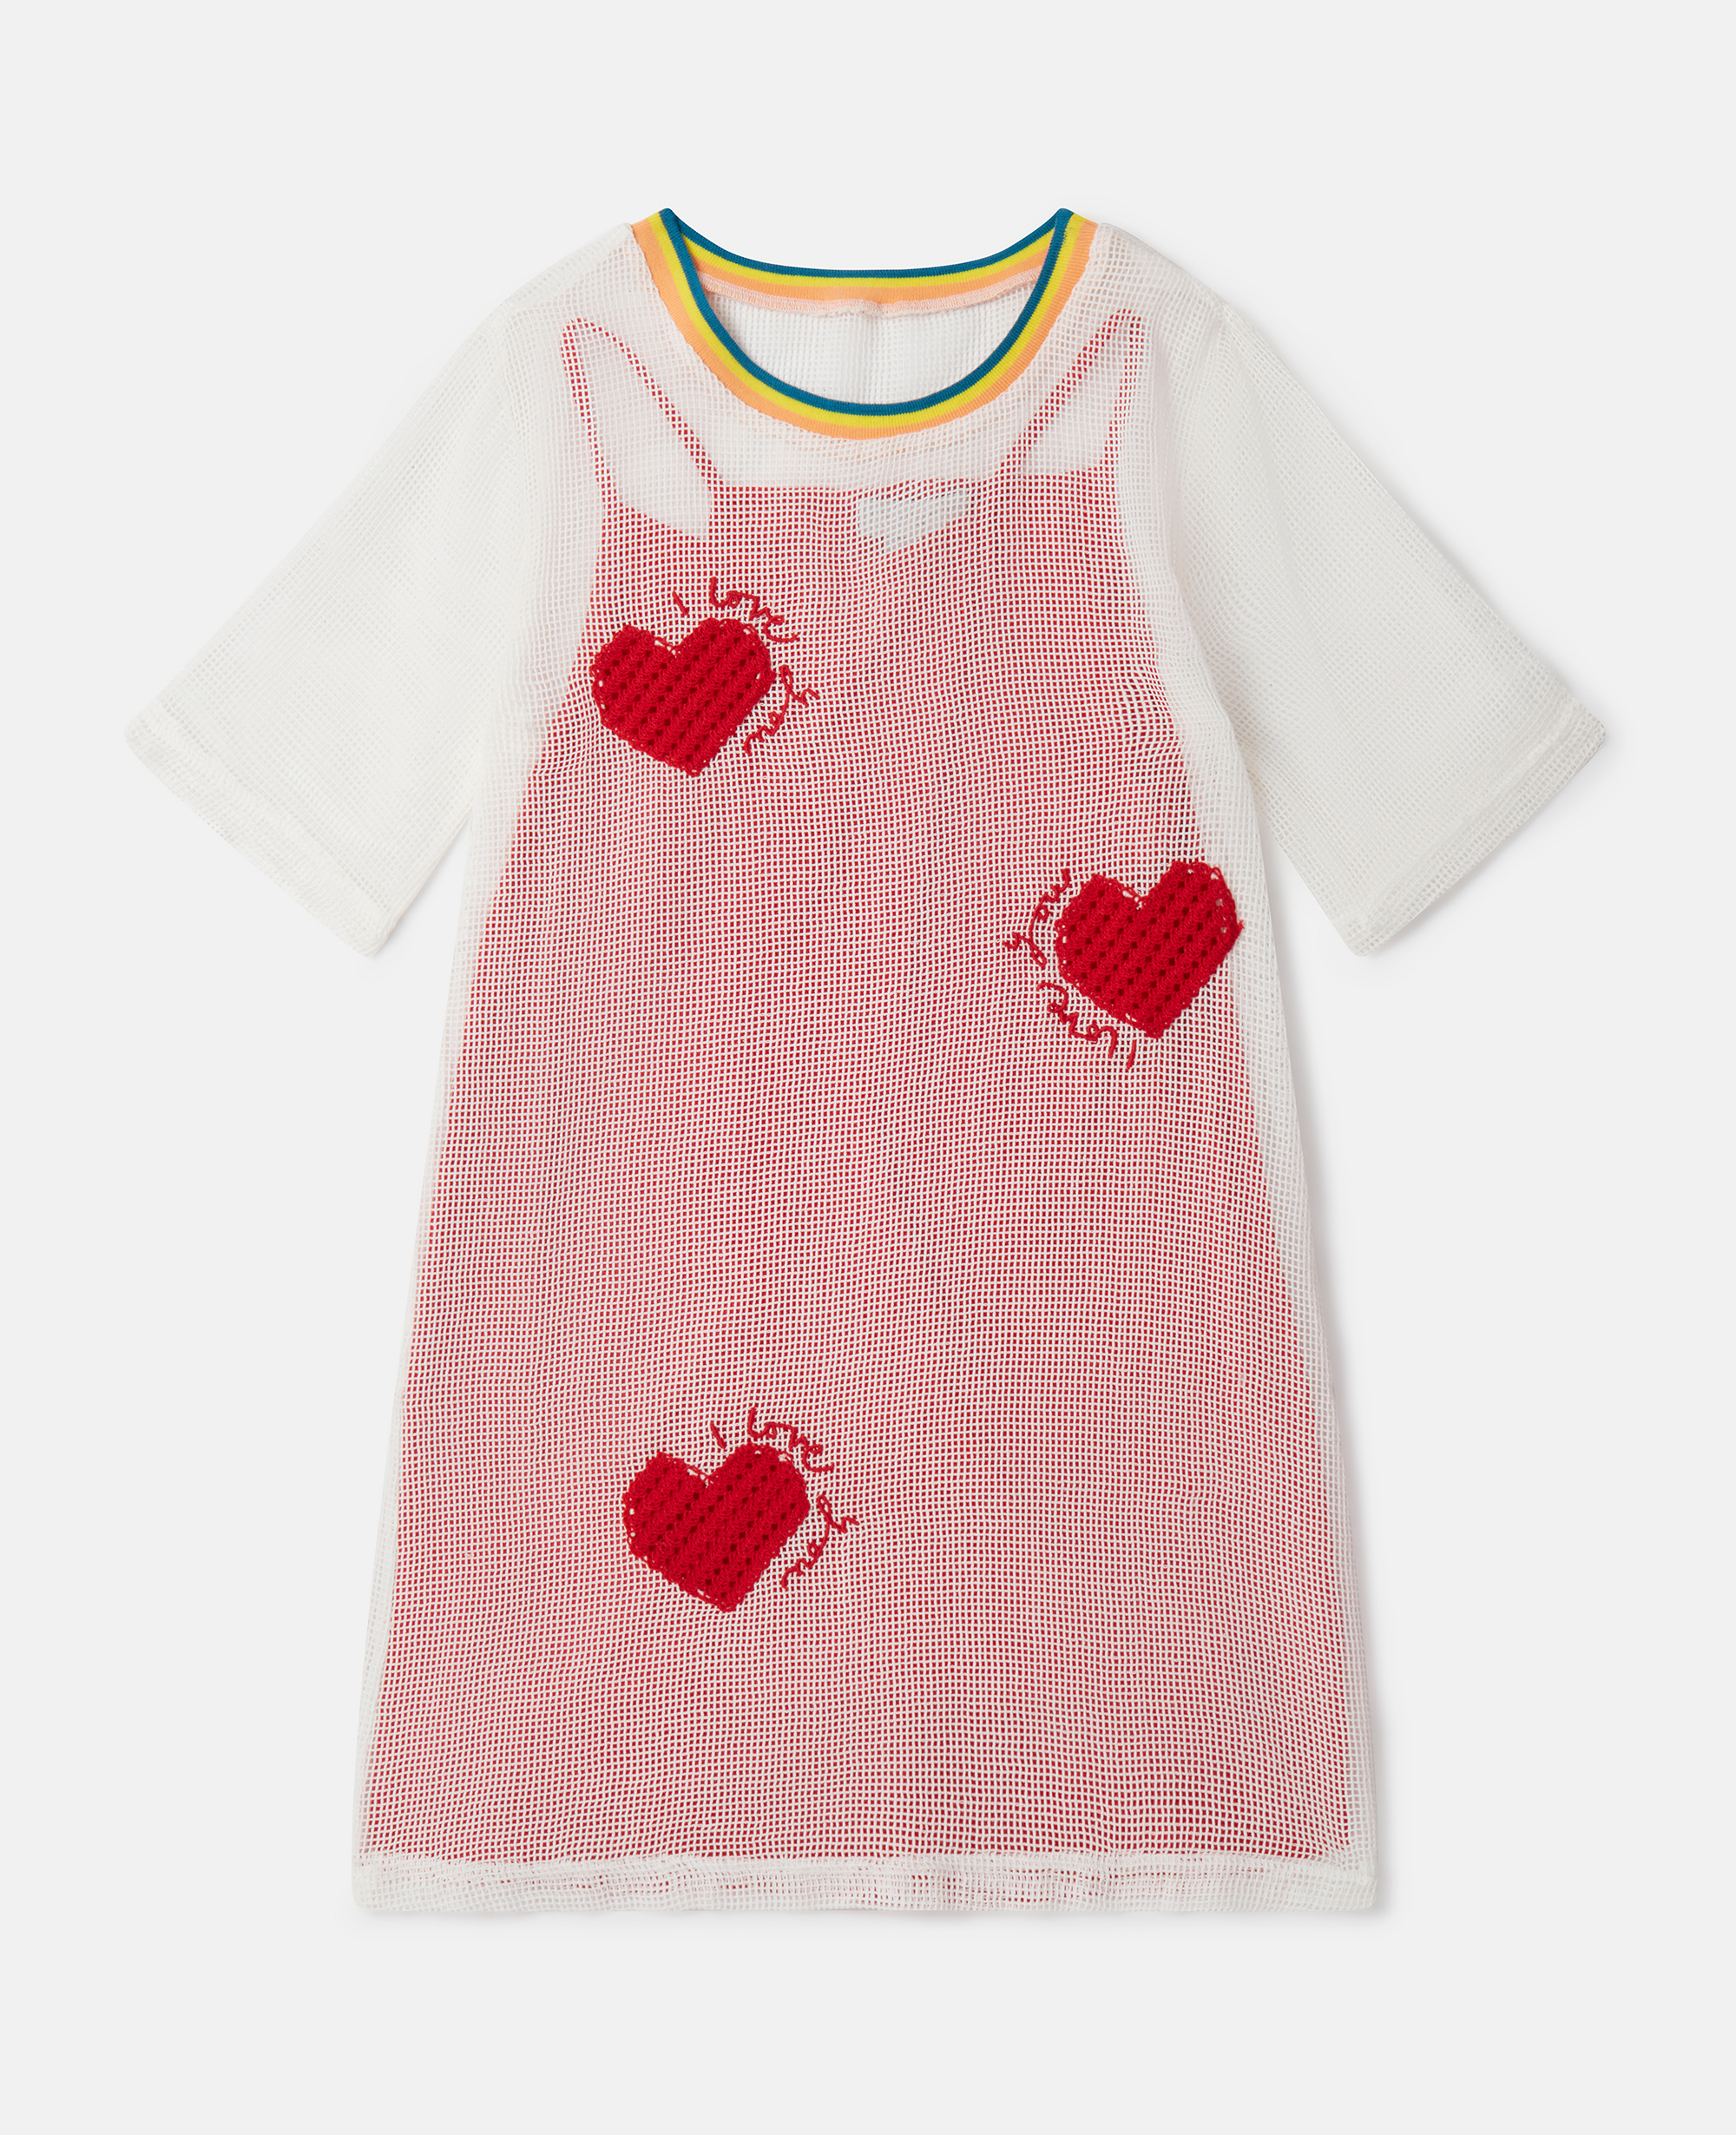 stella mccartney - robe t-shirt en mesh avec caurs, multicolore, taille: 5